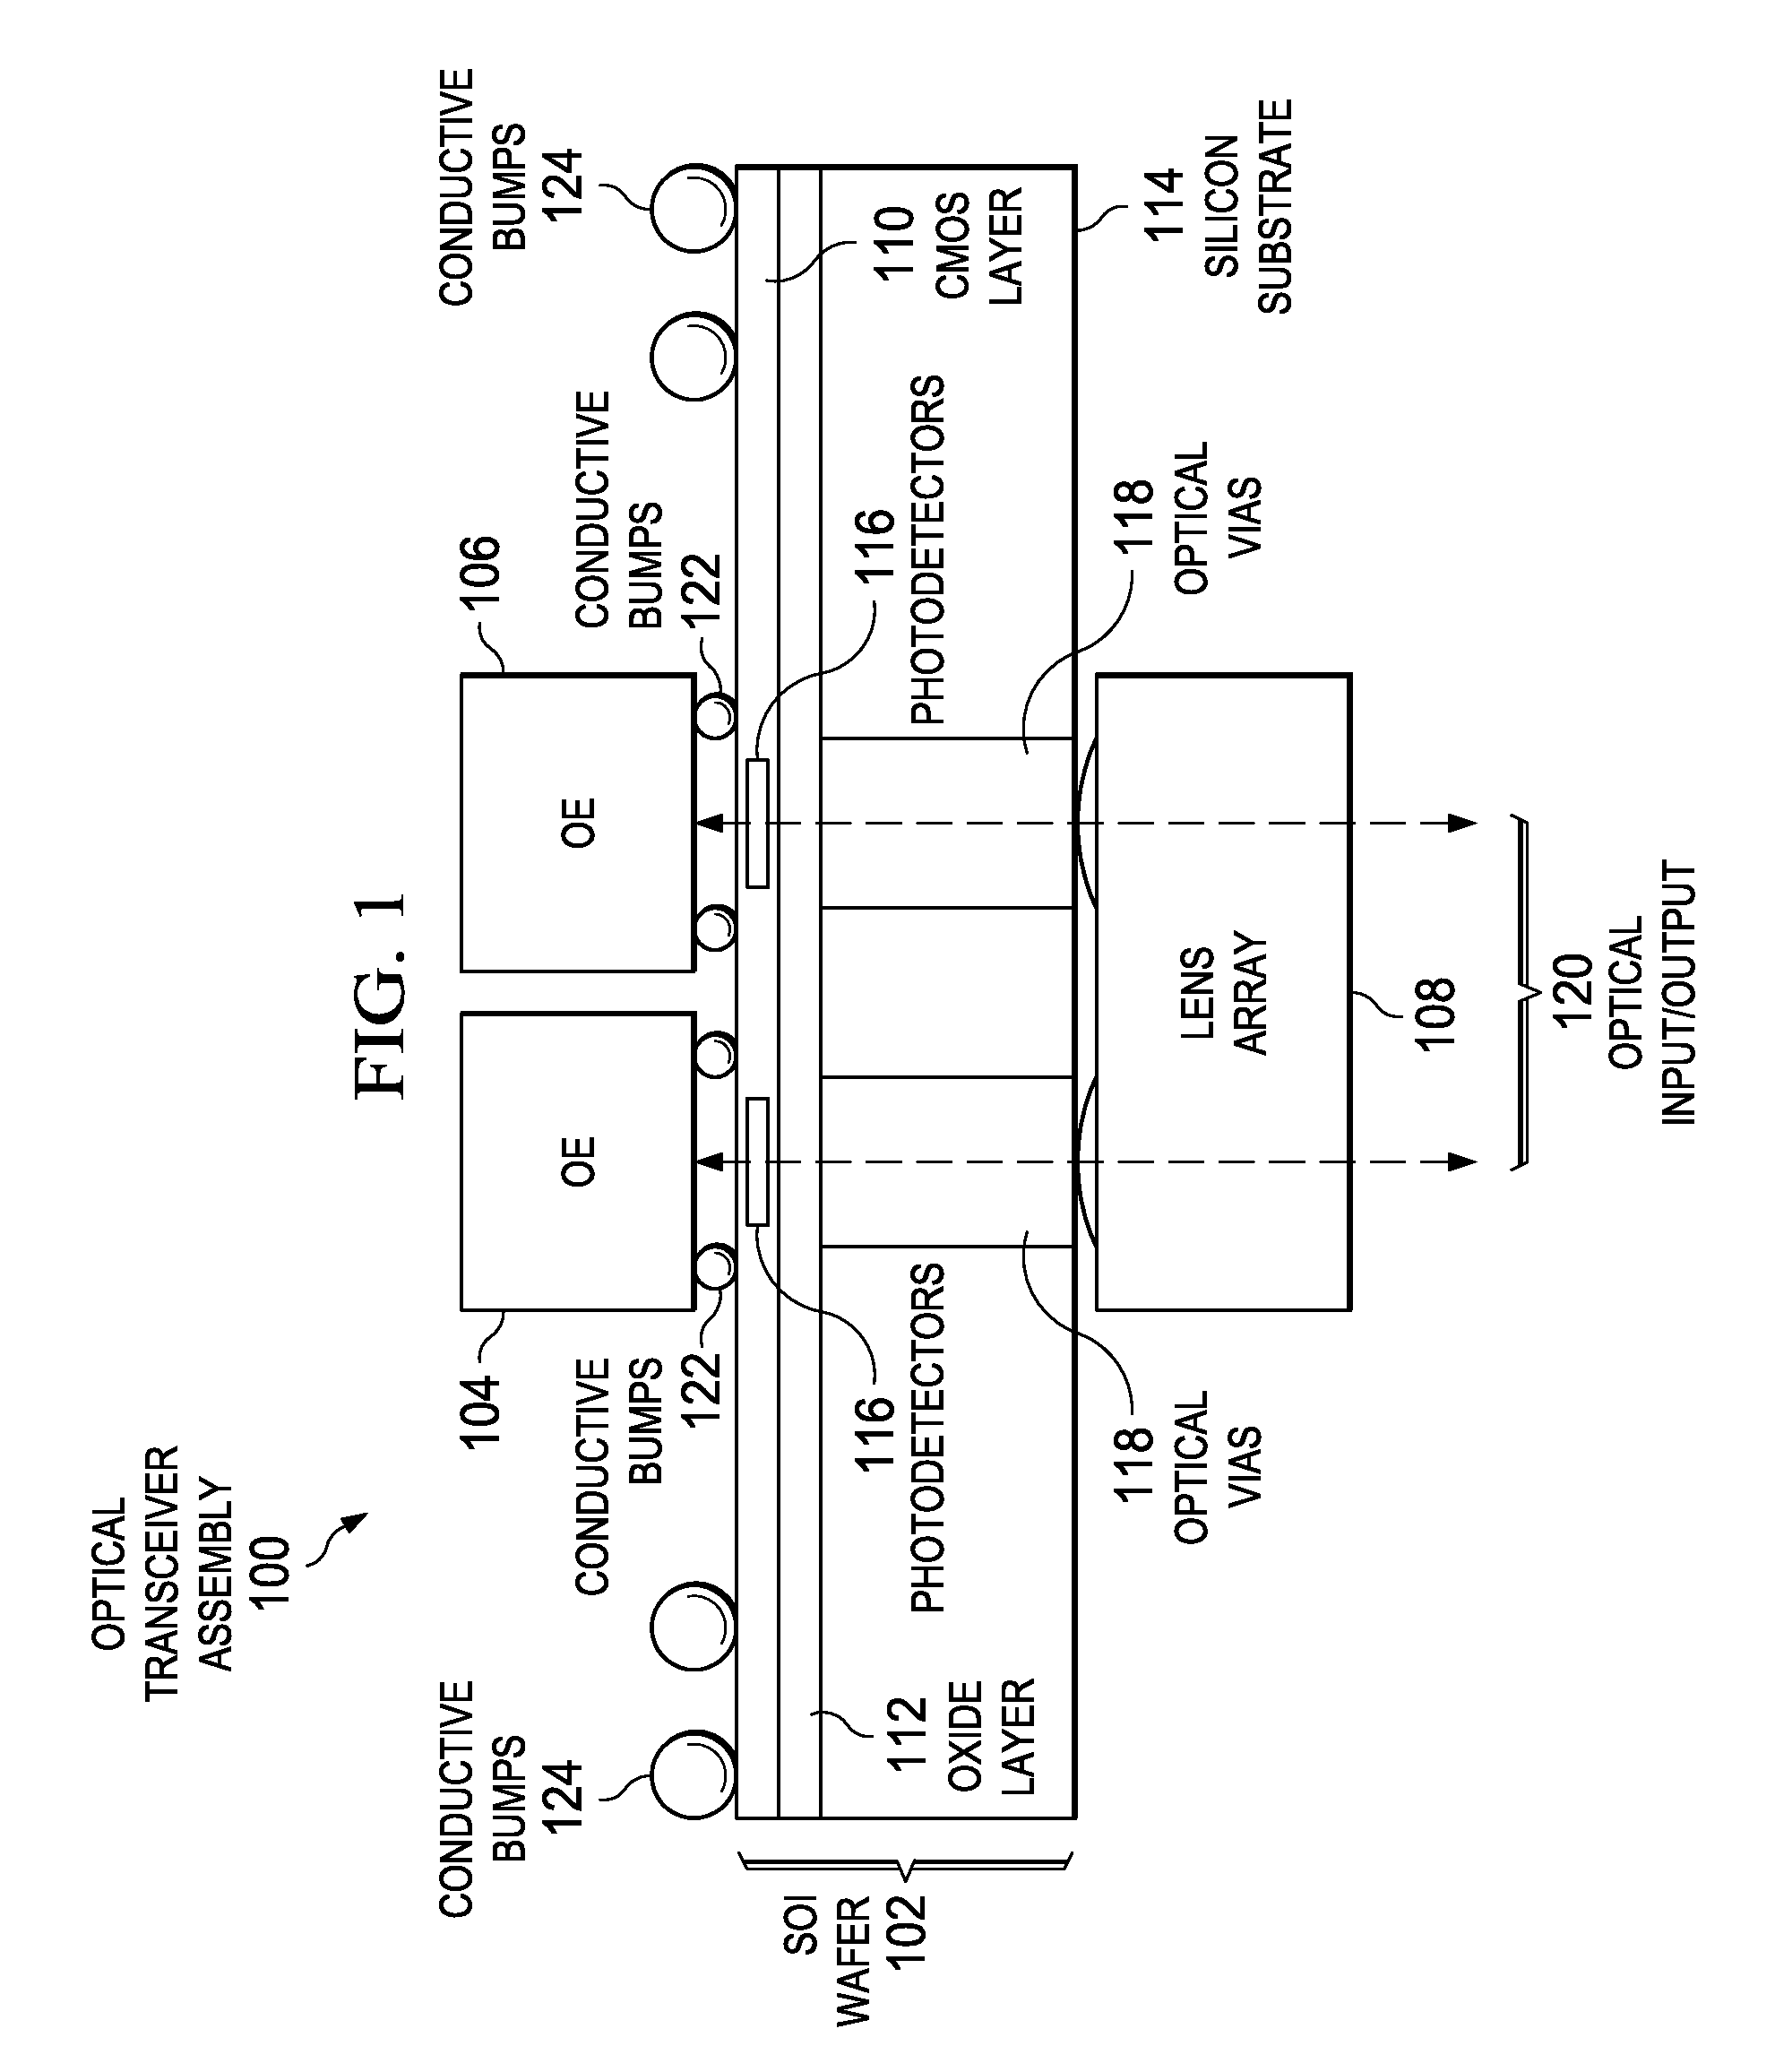 Parellel optical transceiver module